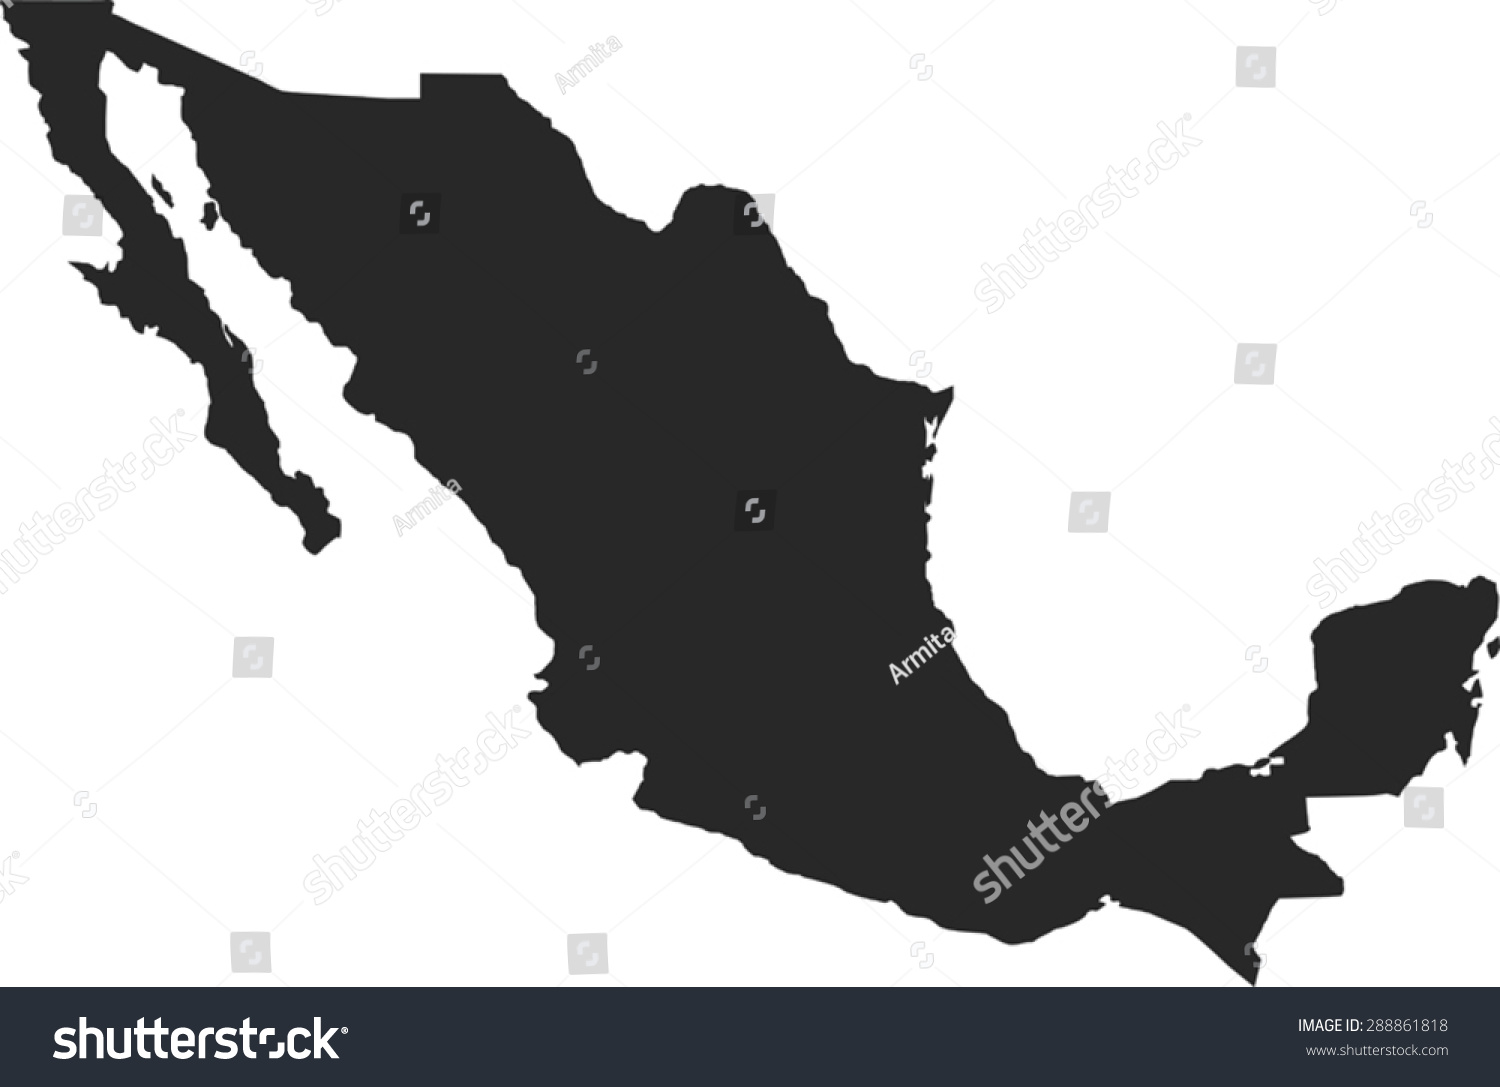 Mexico Vector Map - 288861818 : Shutterstock